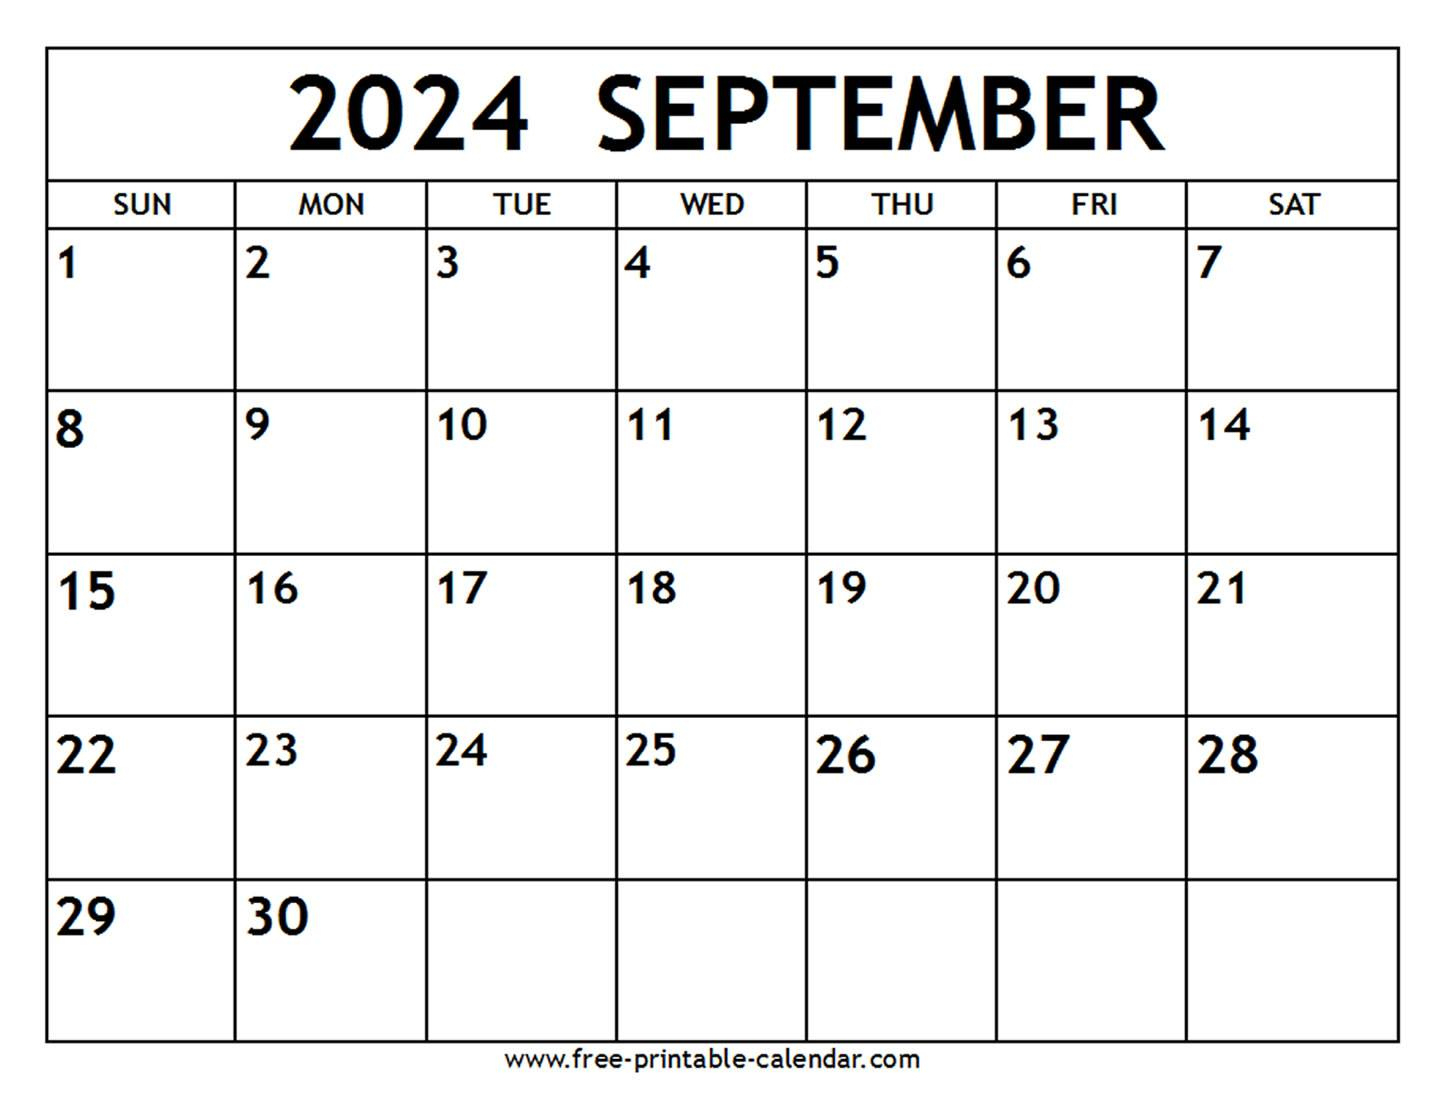 September 2024 Calendar - Free-Printable-Calendar | September 2024 Calendar Printable Free